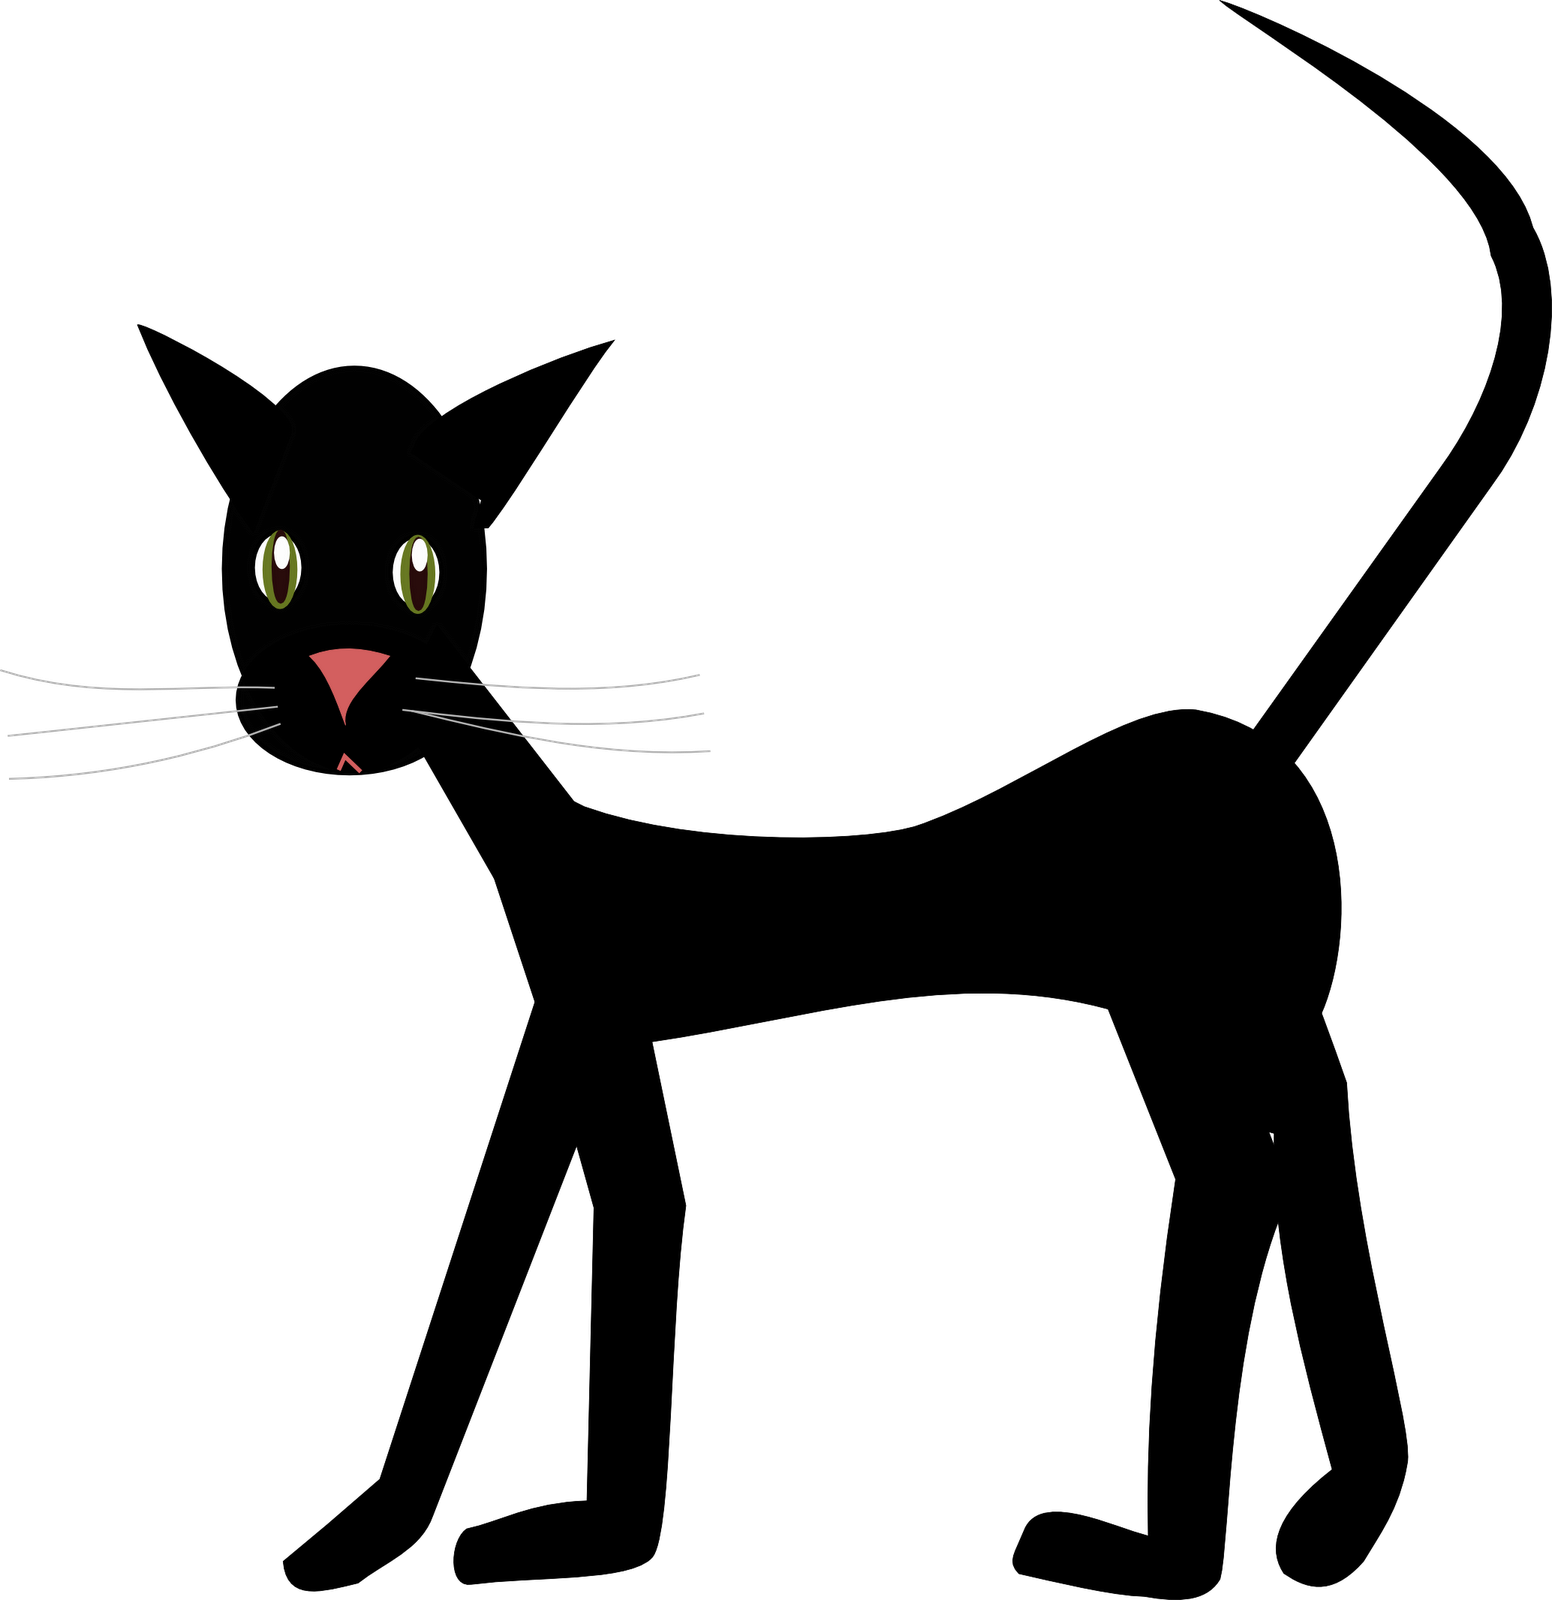 Cat images clip art. Kitten clipart translucent